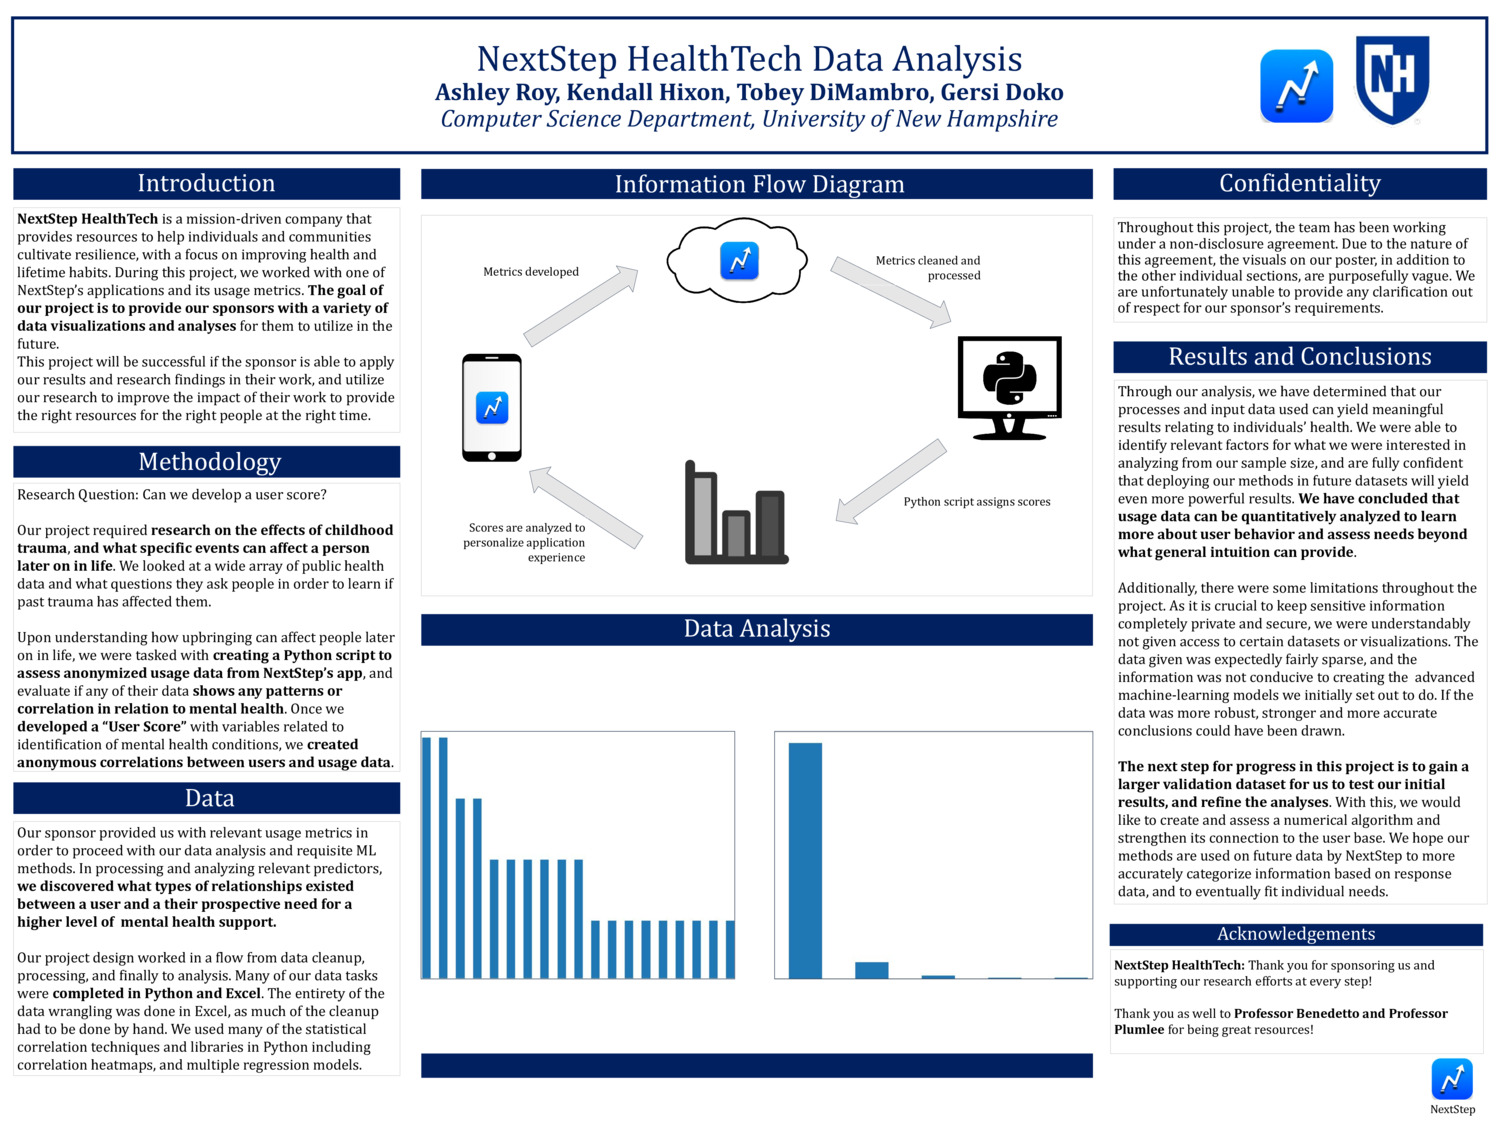 Nextstep Healthtech Data Analysis by amr1099